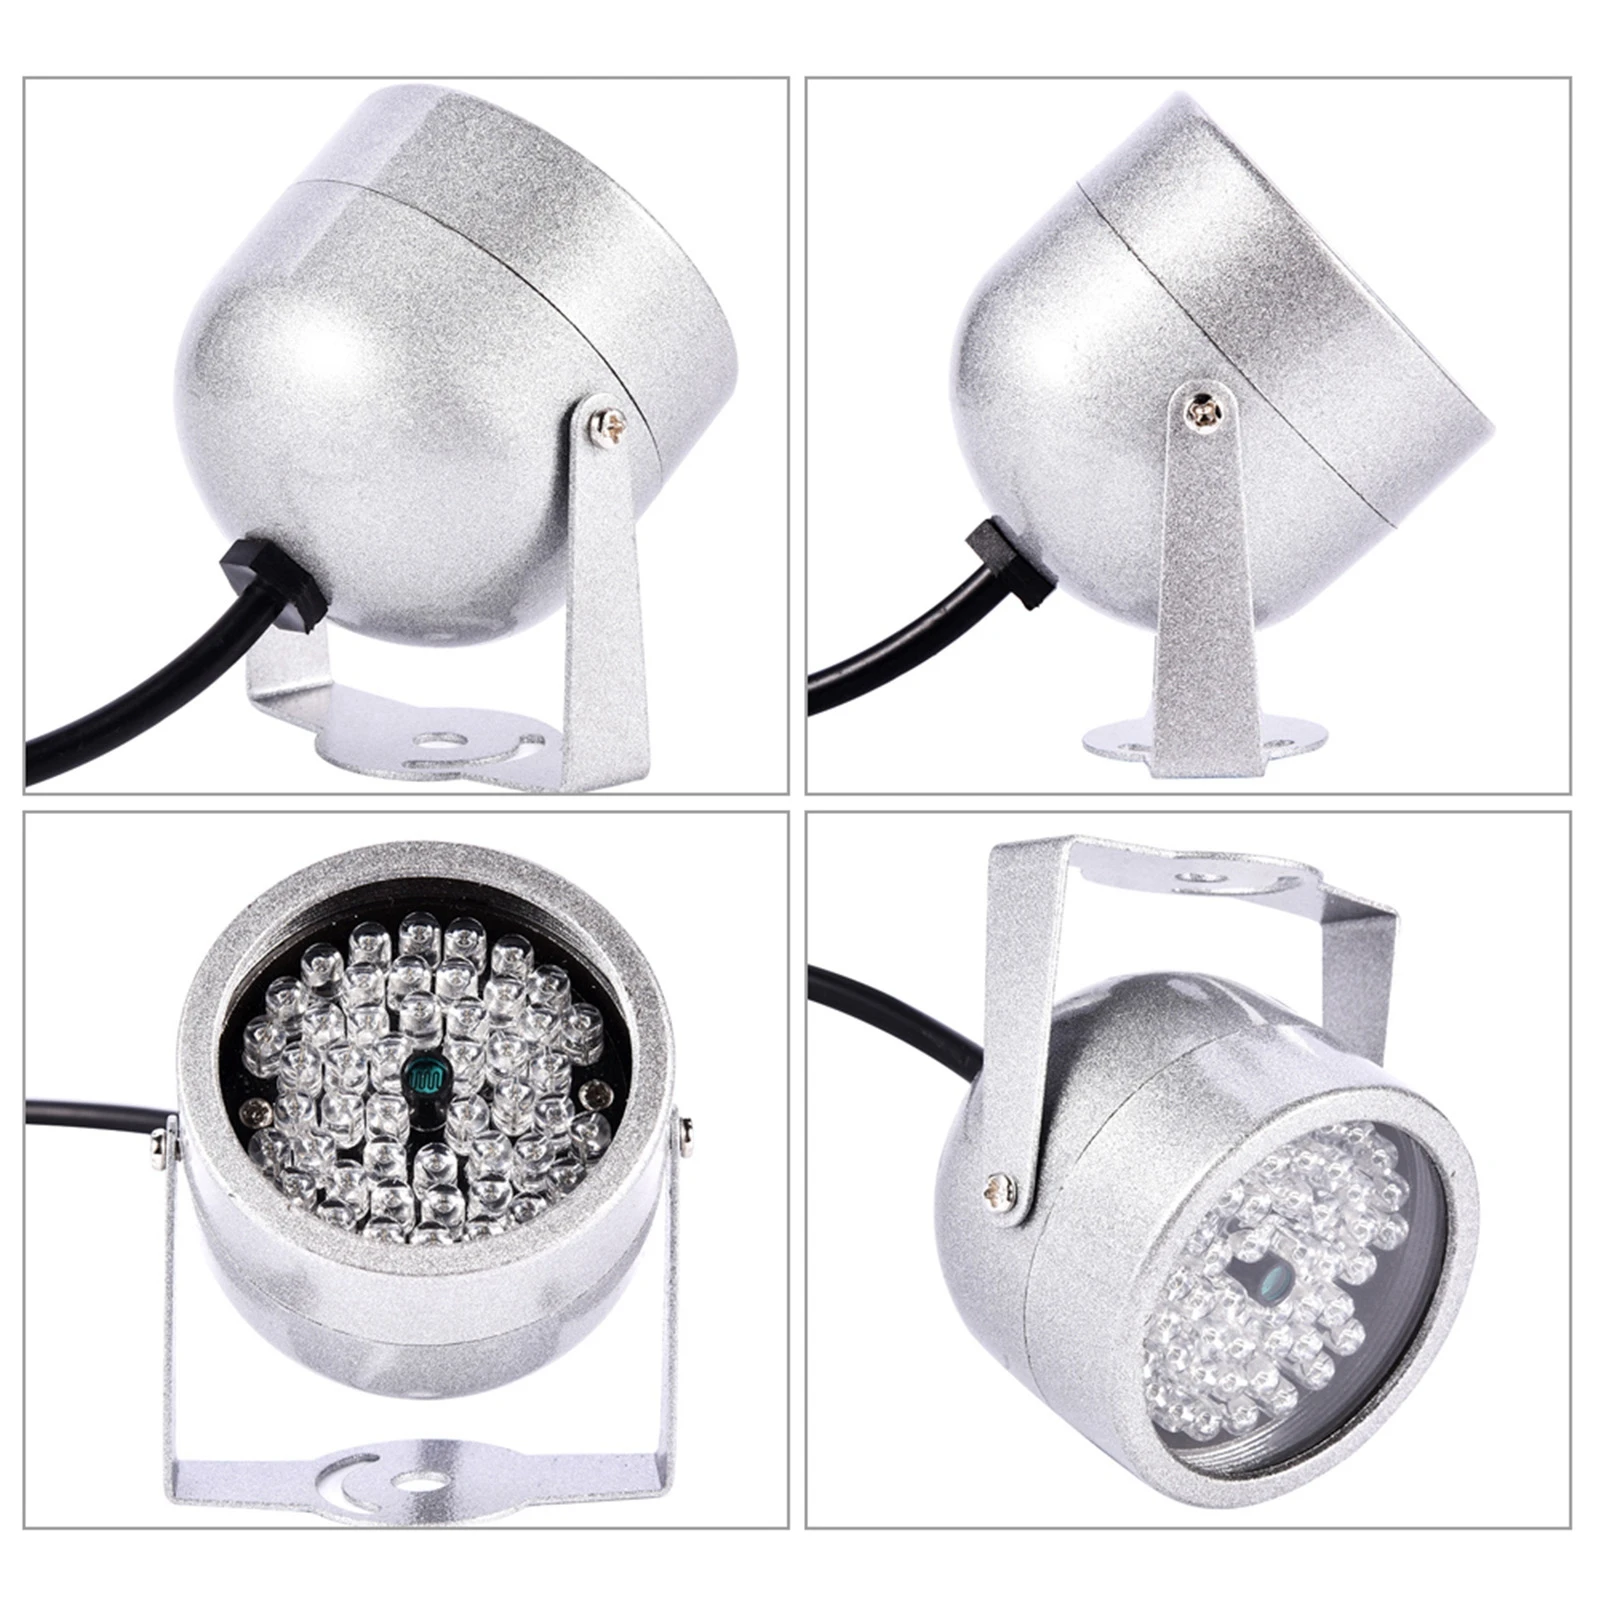 48 LED IR Illuminator Lights Waterproof Infrared Night Vision Light for Security CCTV Camera.